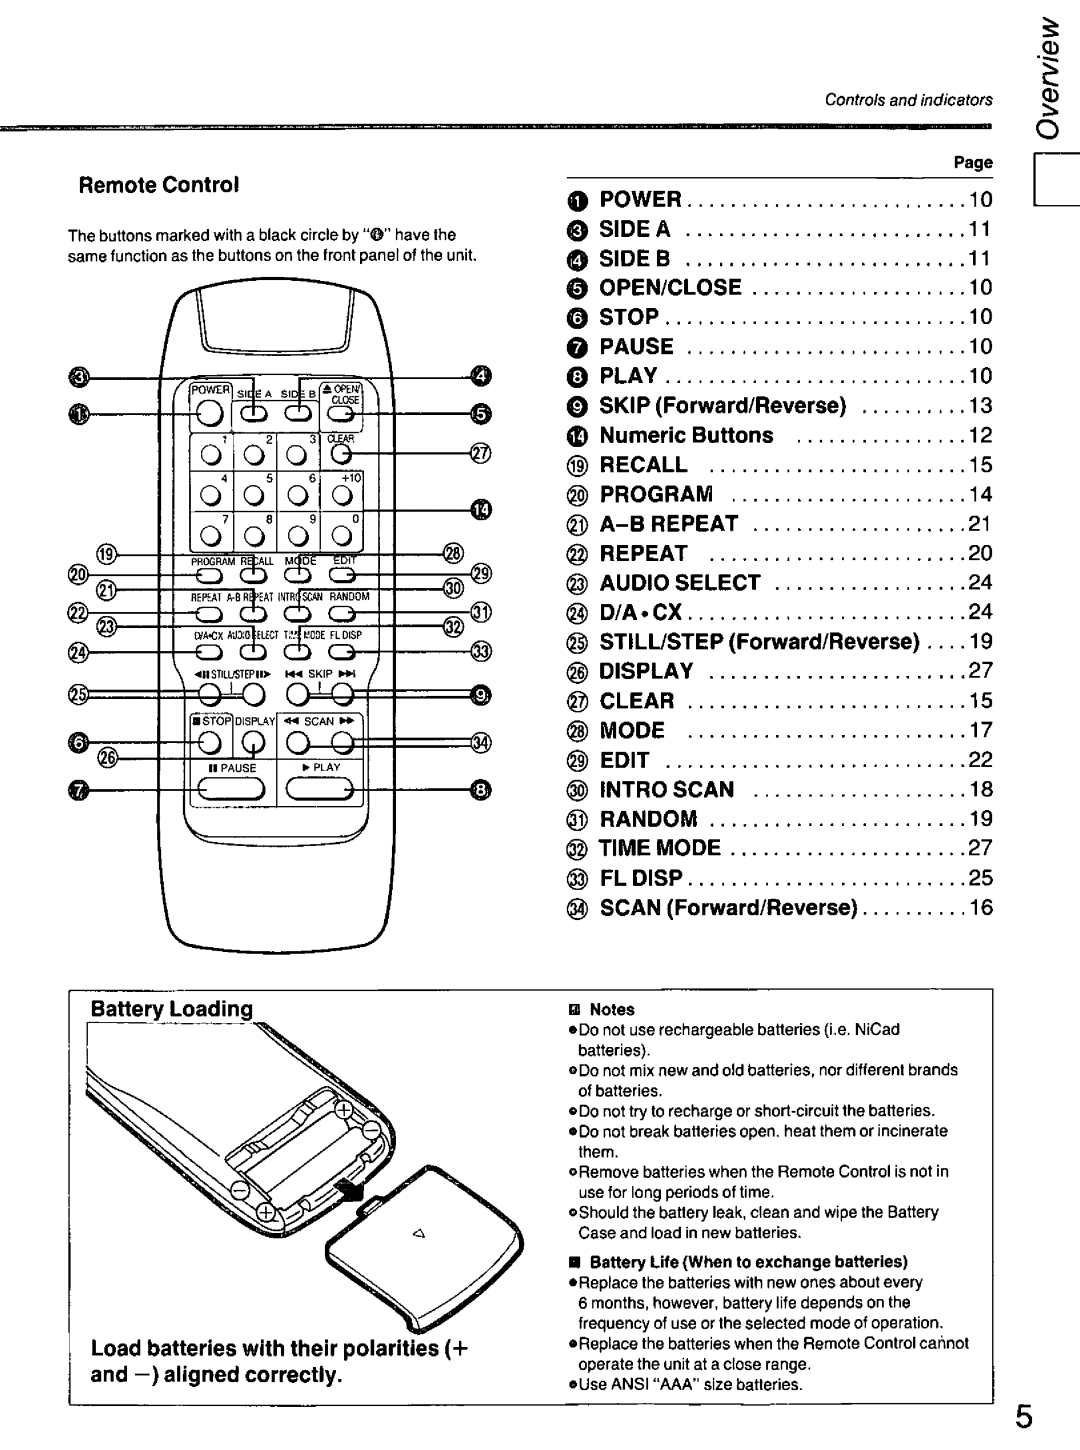 Panasonic lx-h680 manual 